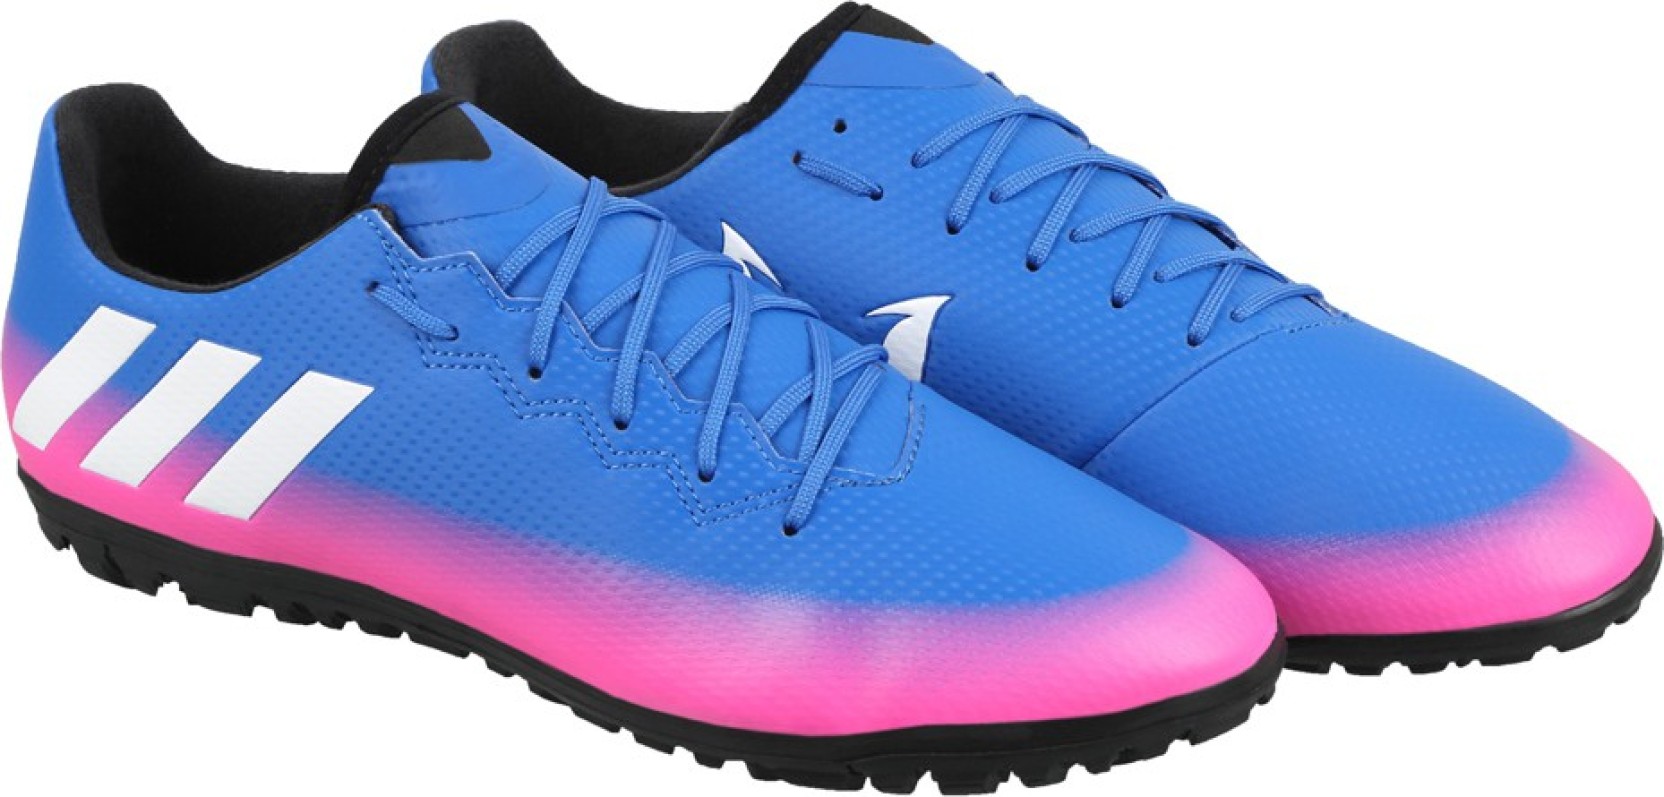 Adidas MESSI 16.3 TF Football Shoes - Buy BLUE/FTWWHT/SORANG Color ...